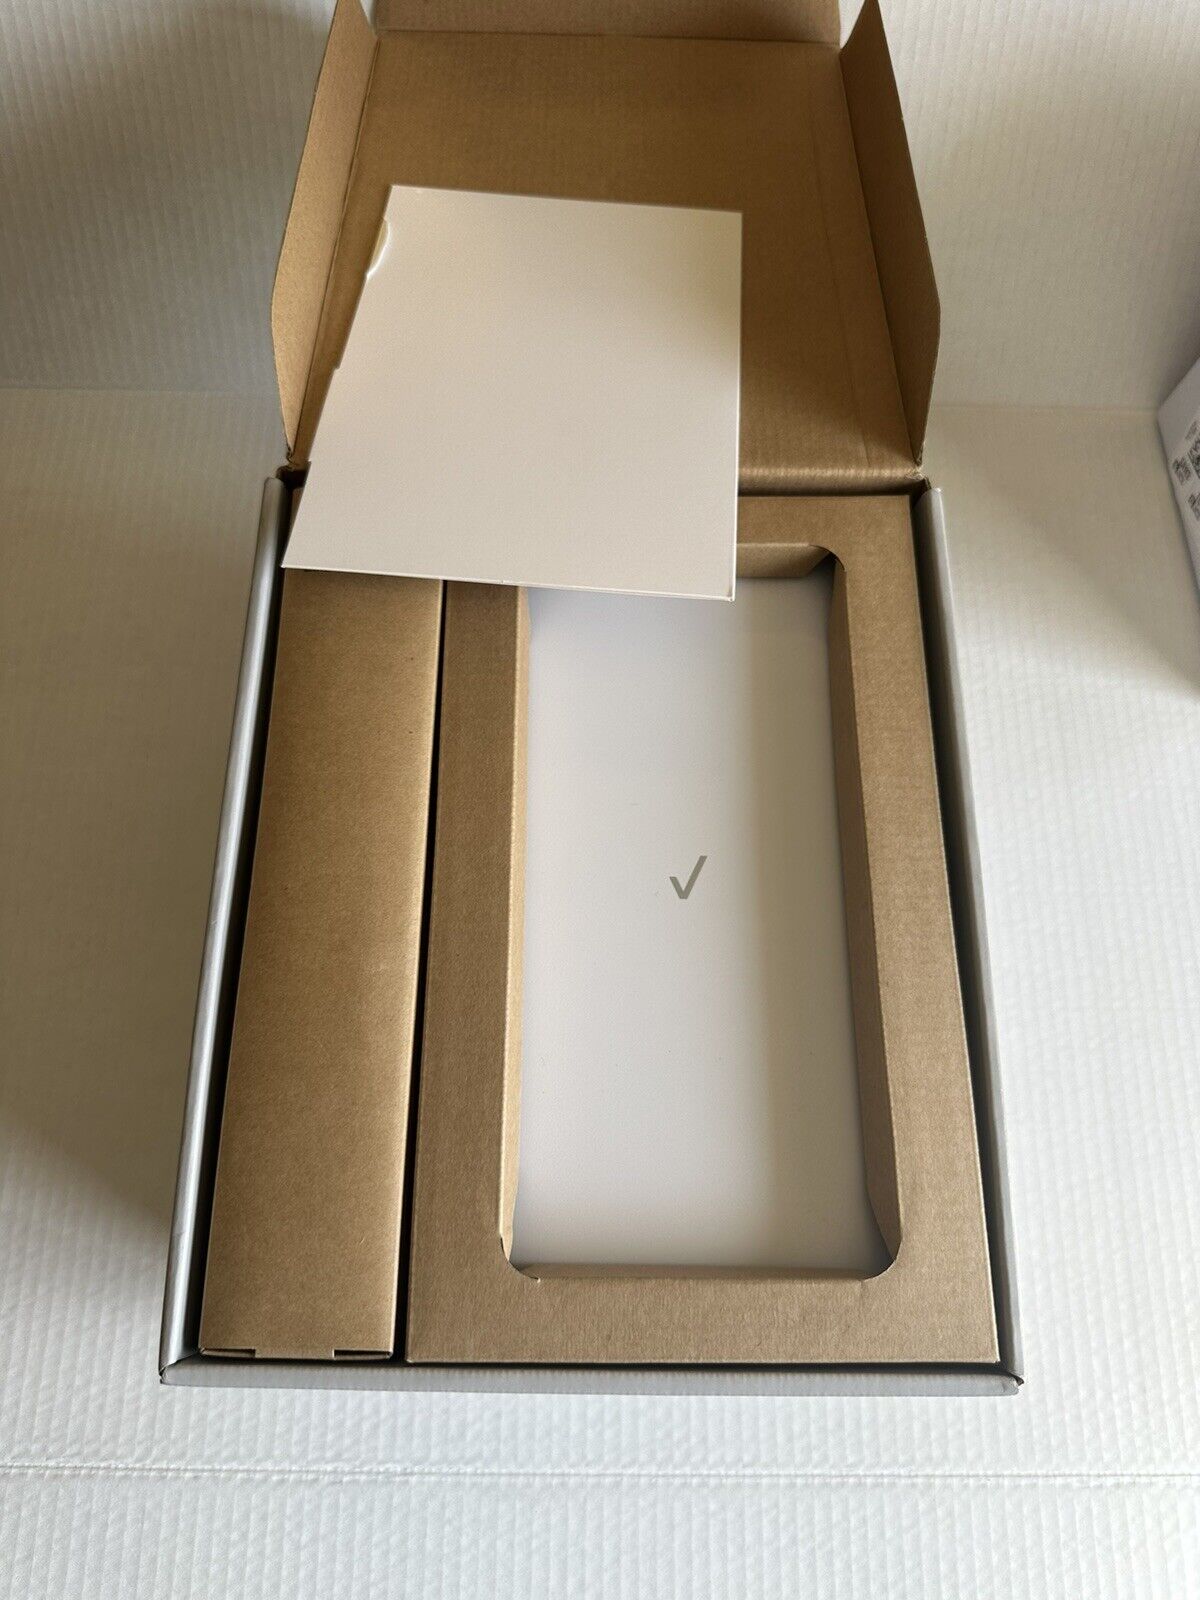 Verizon CR1000A 1000 Mbps 3 Port Wireless Router - White ( Open Box)